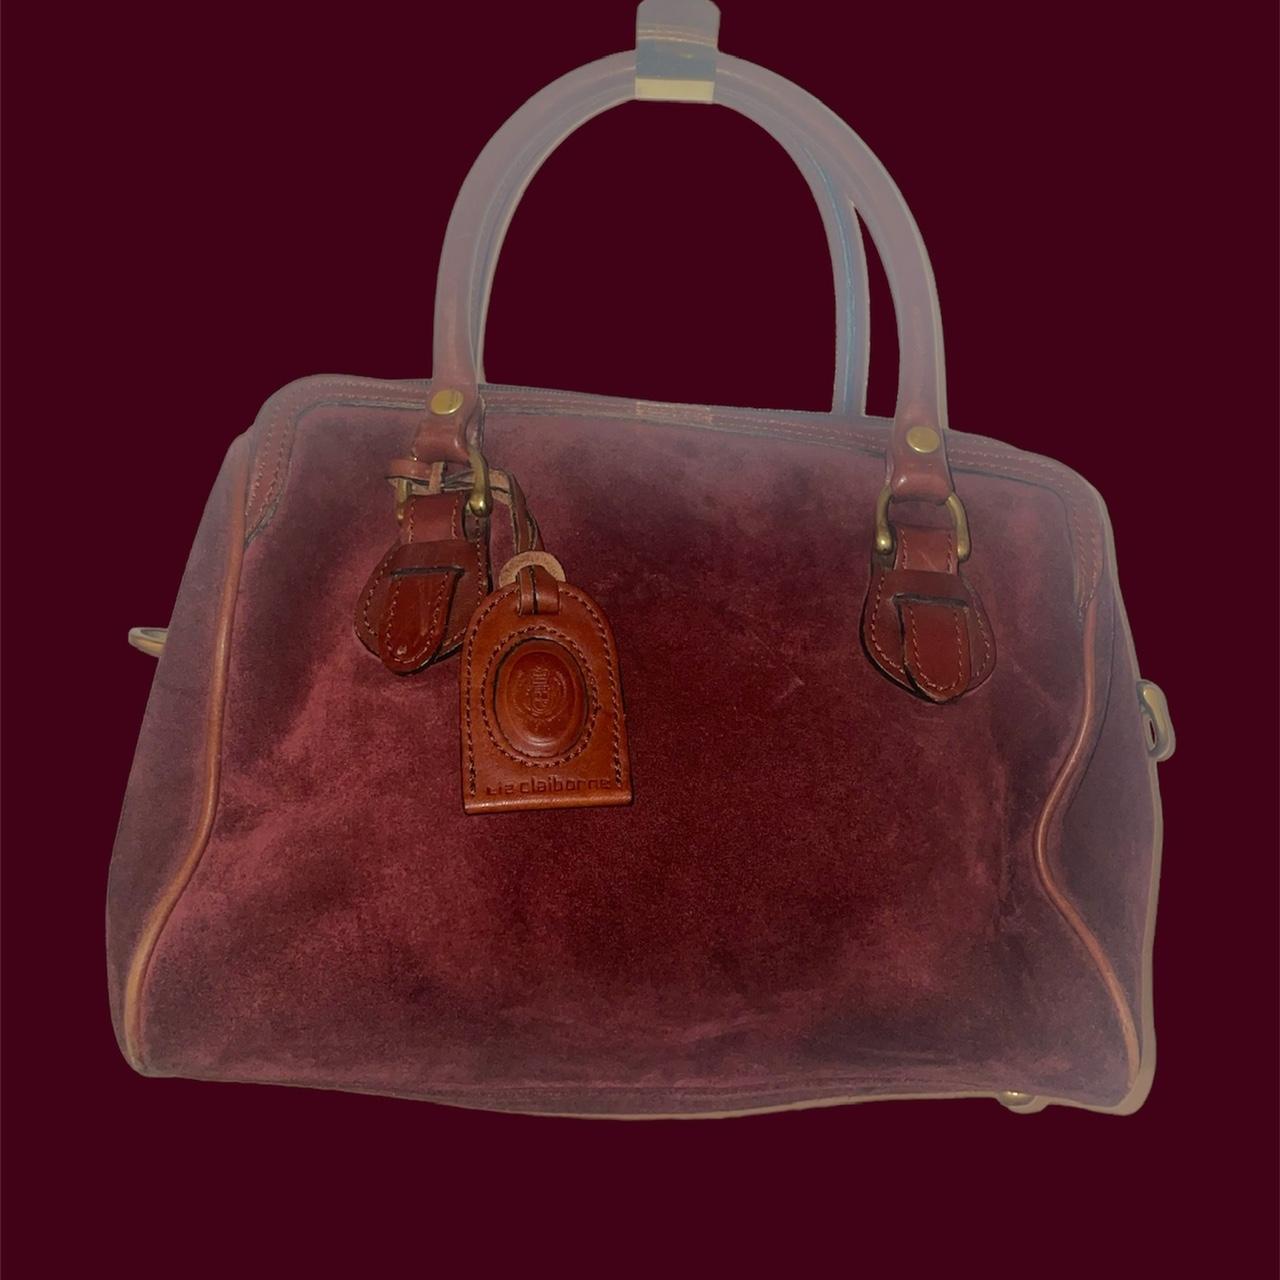 Vintage Liz Claiborne Purse, Beige Fabric Woven Look, Faux Brown Leather,  Natural Color Tones Multiple Compartments & Pockets, SANITIZED Bag - Etsy |  Purses, Purses and bags, Boho purses